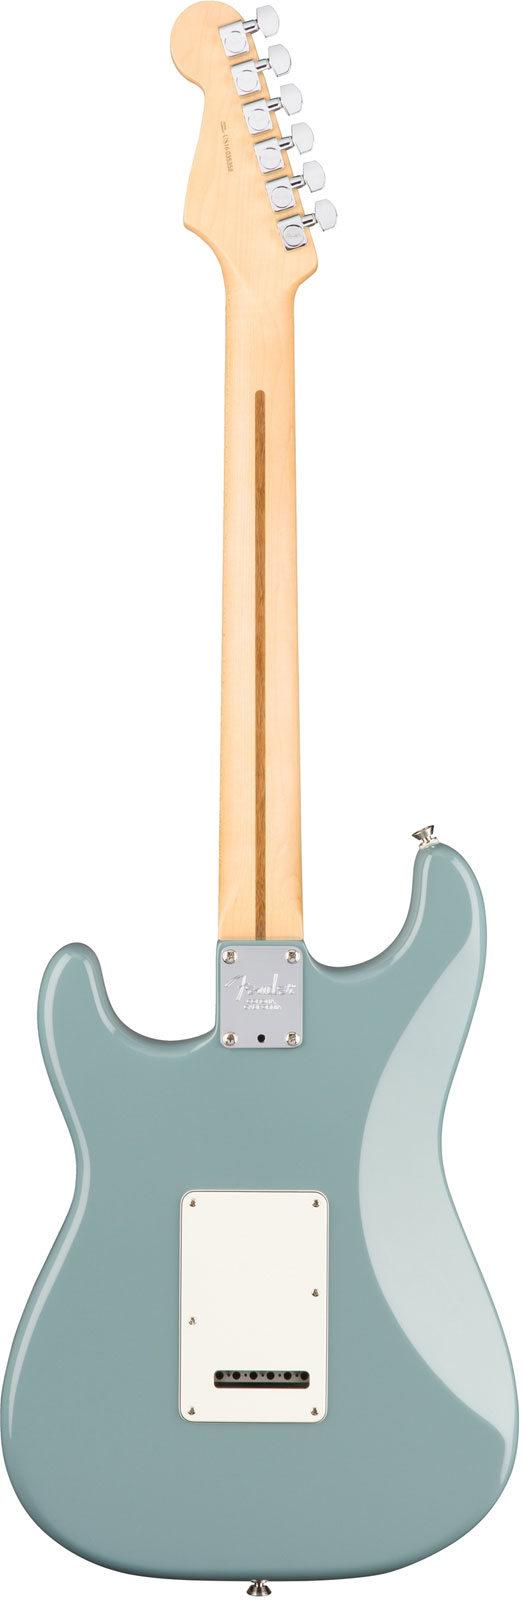 Fender Strat American Professional 2017 3s Usa Mn - Sonic Grey - Guitare Électrique Forme Str - Variation 2